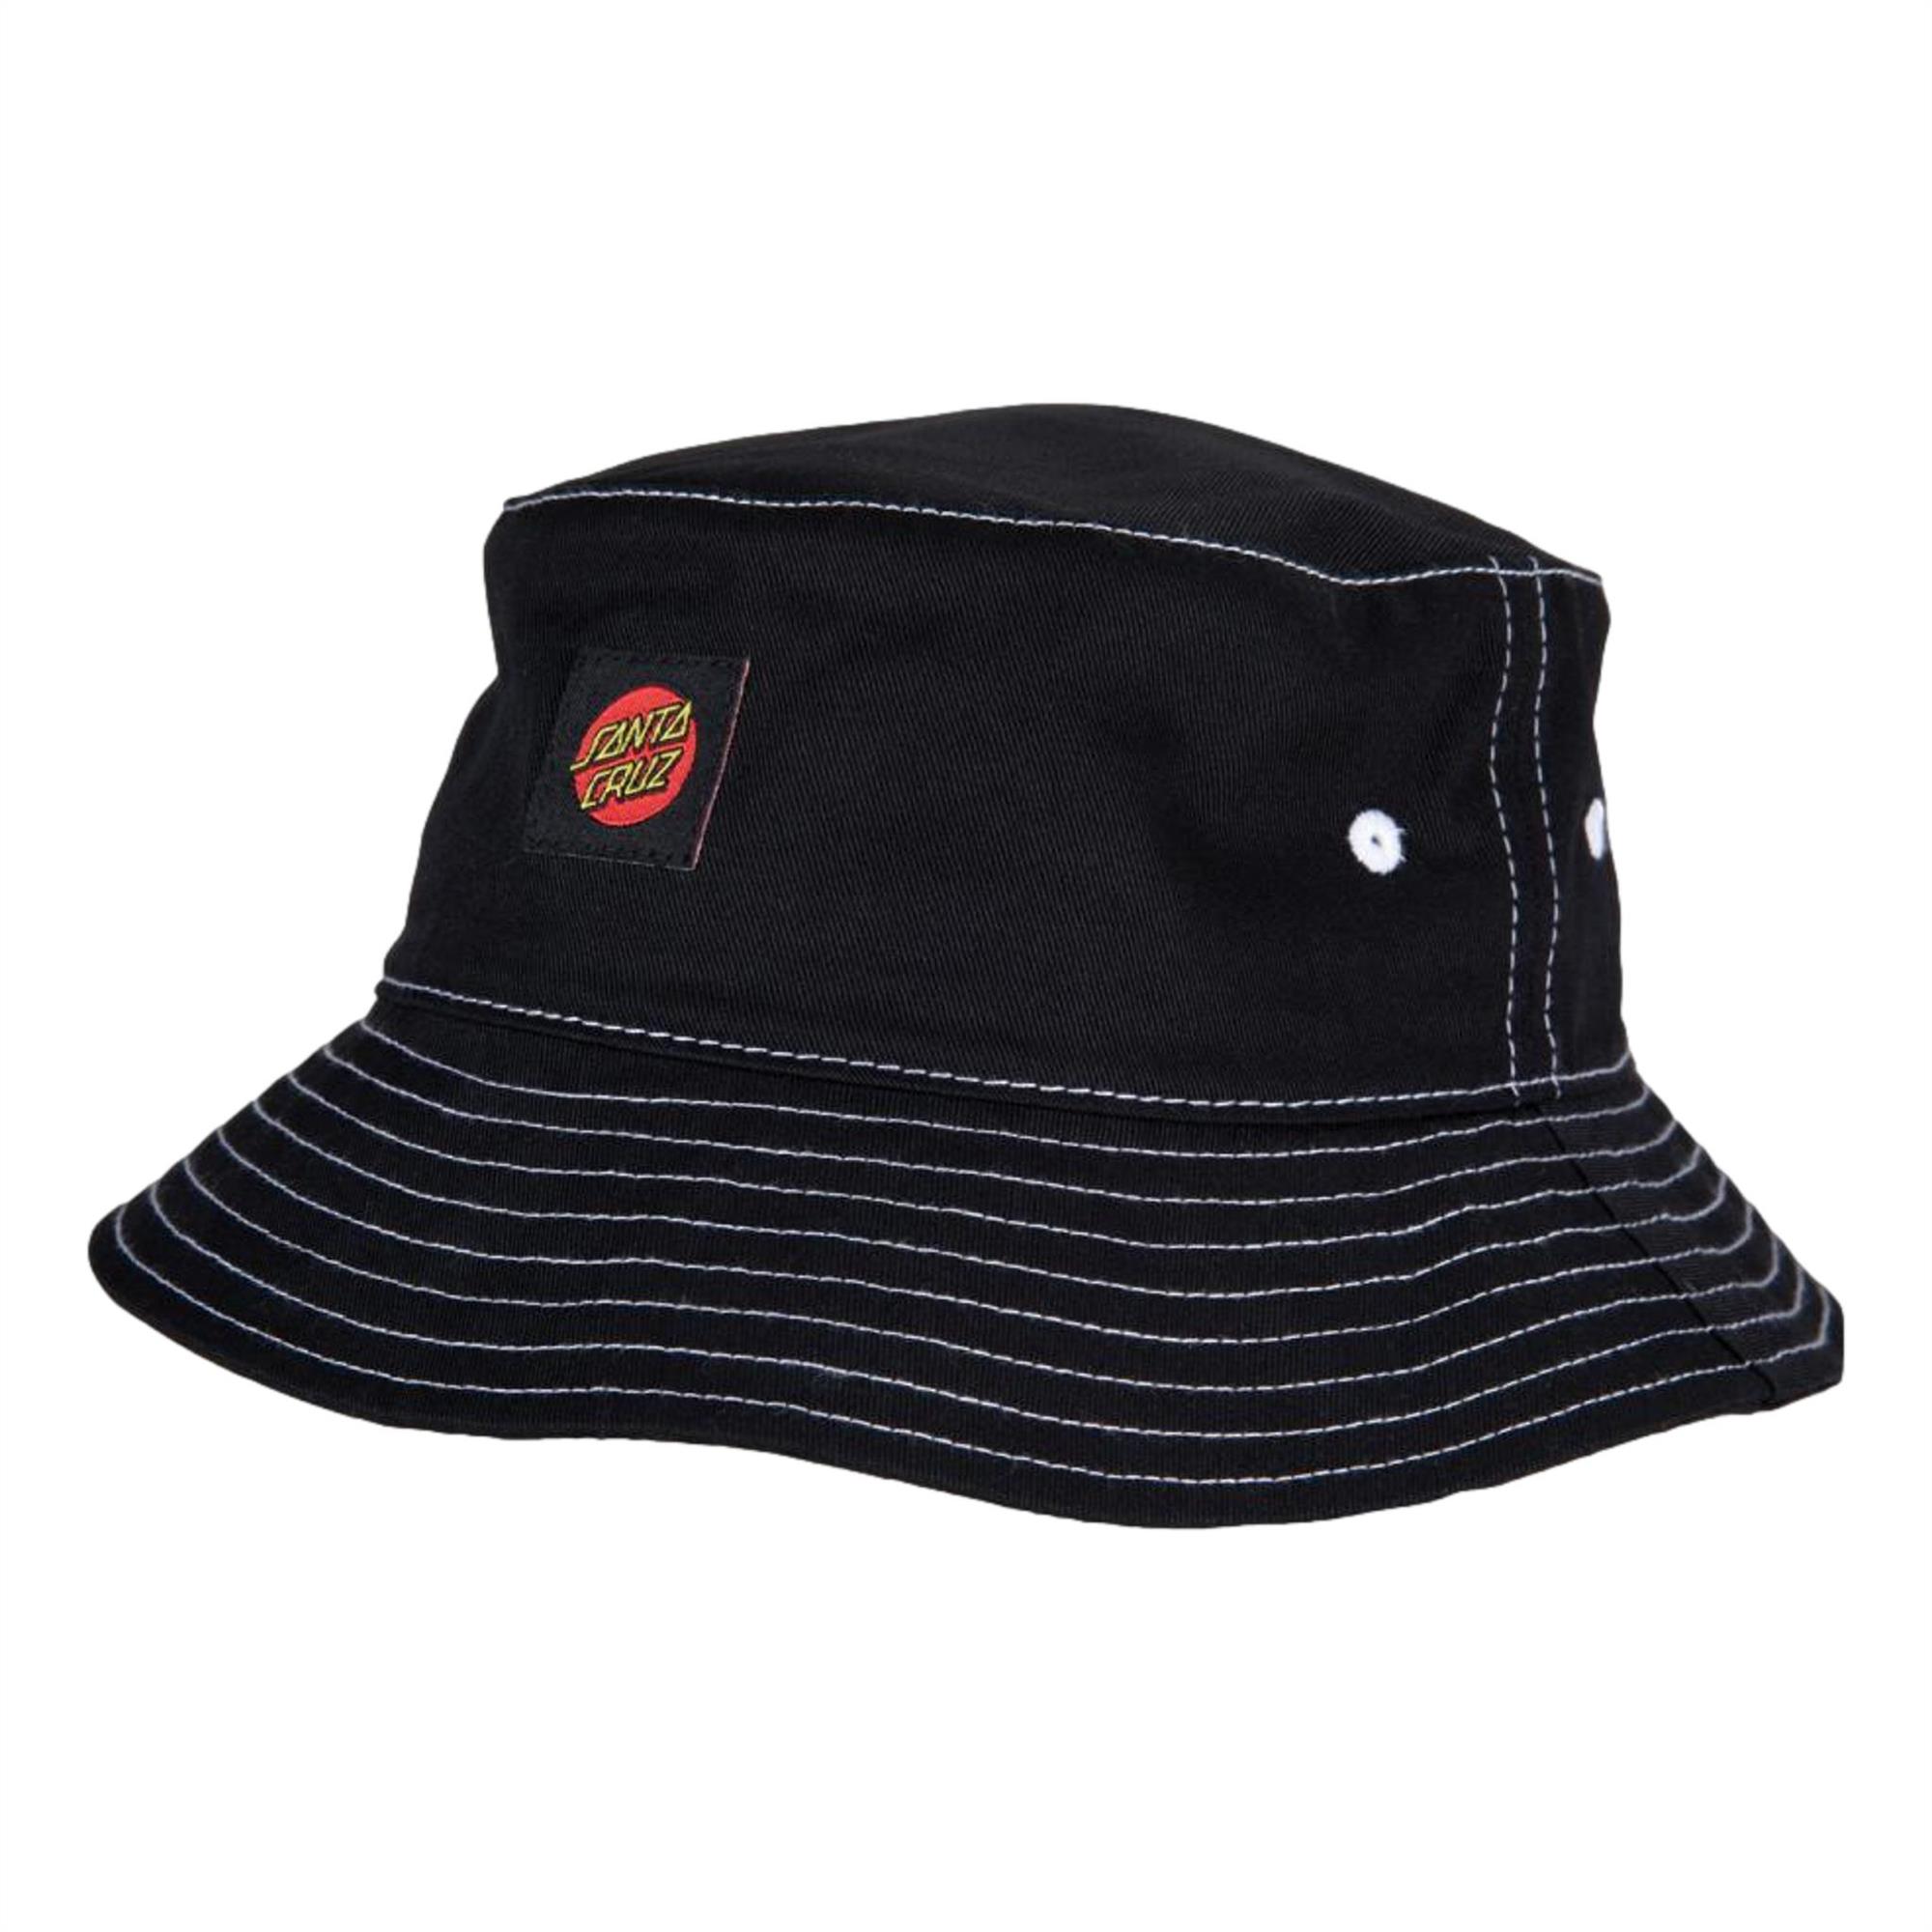 Santa Cruz Unisex Classic Label Bucket Hat eBay 